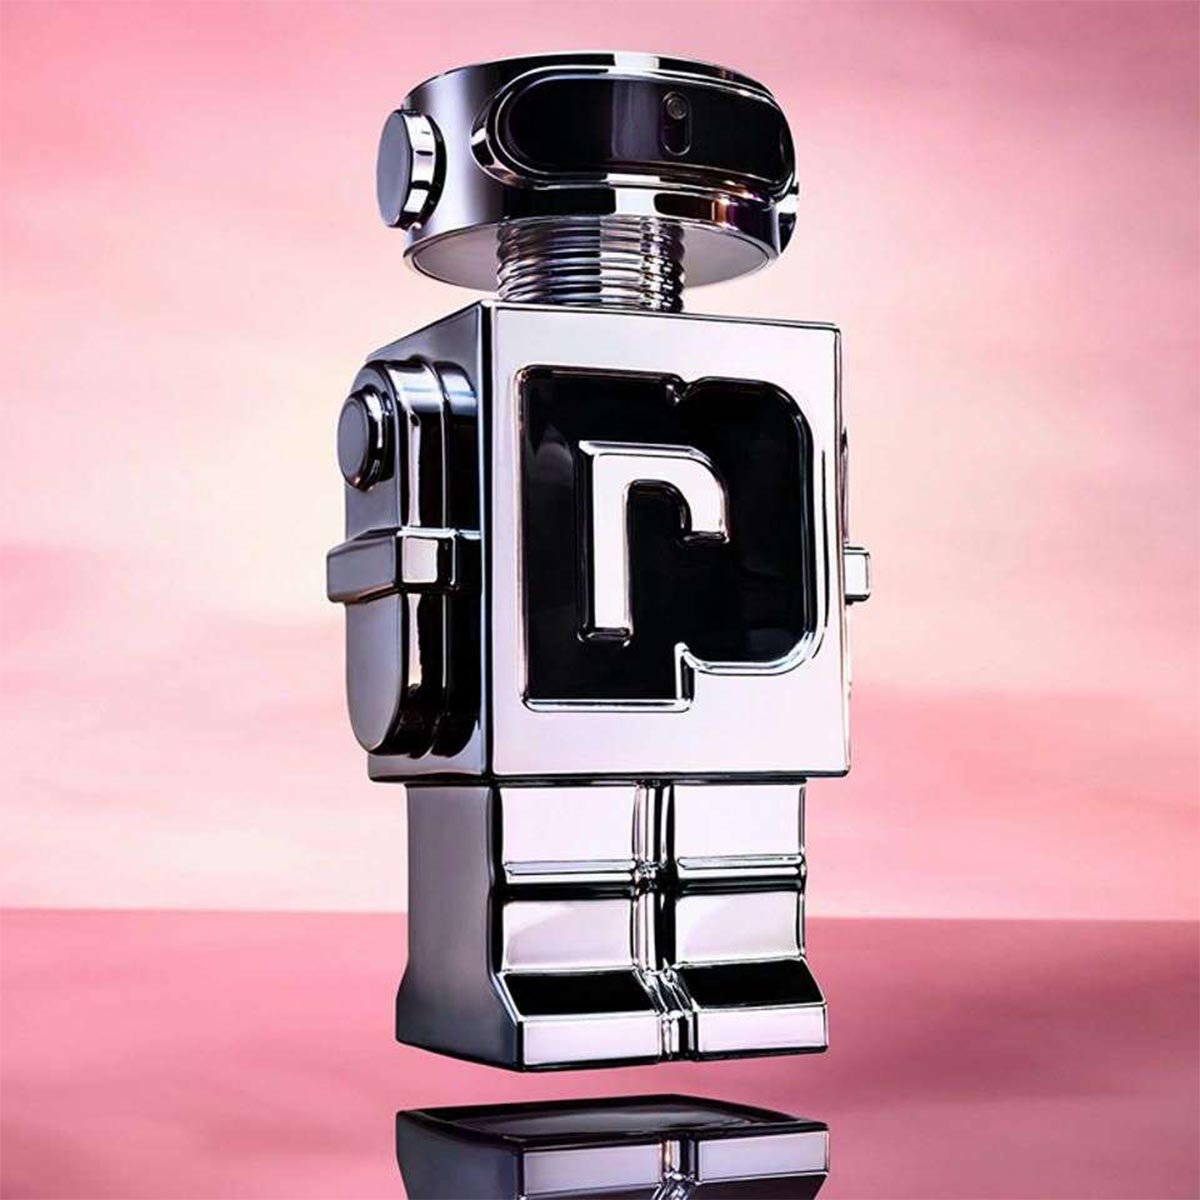 Paco Rabanne Phantom EDT For Men - My Perfume Shop Australia